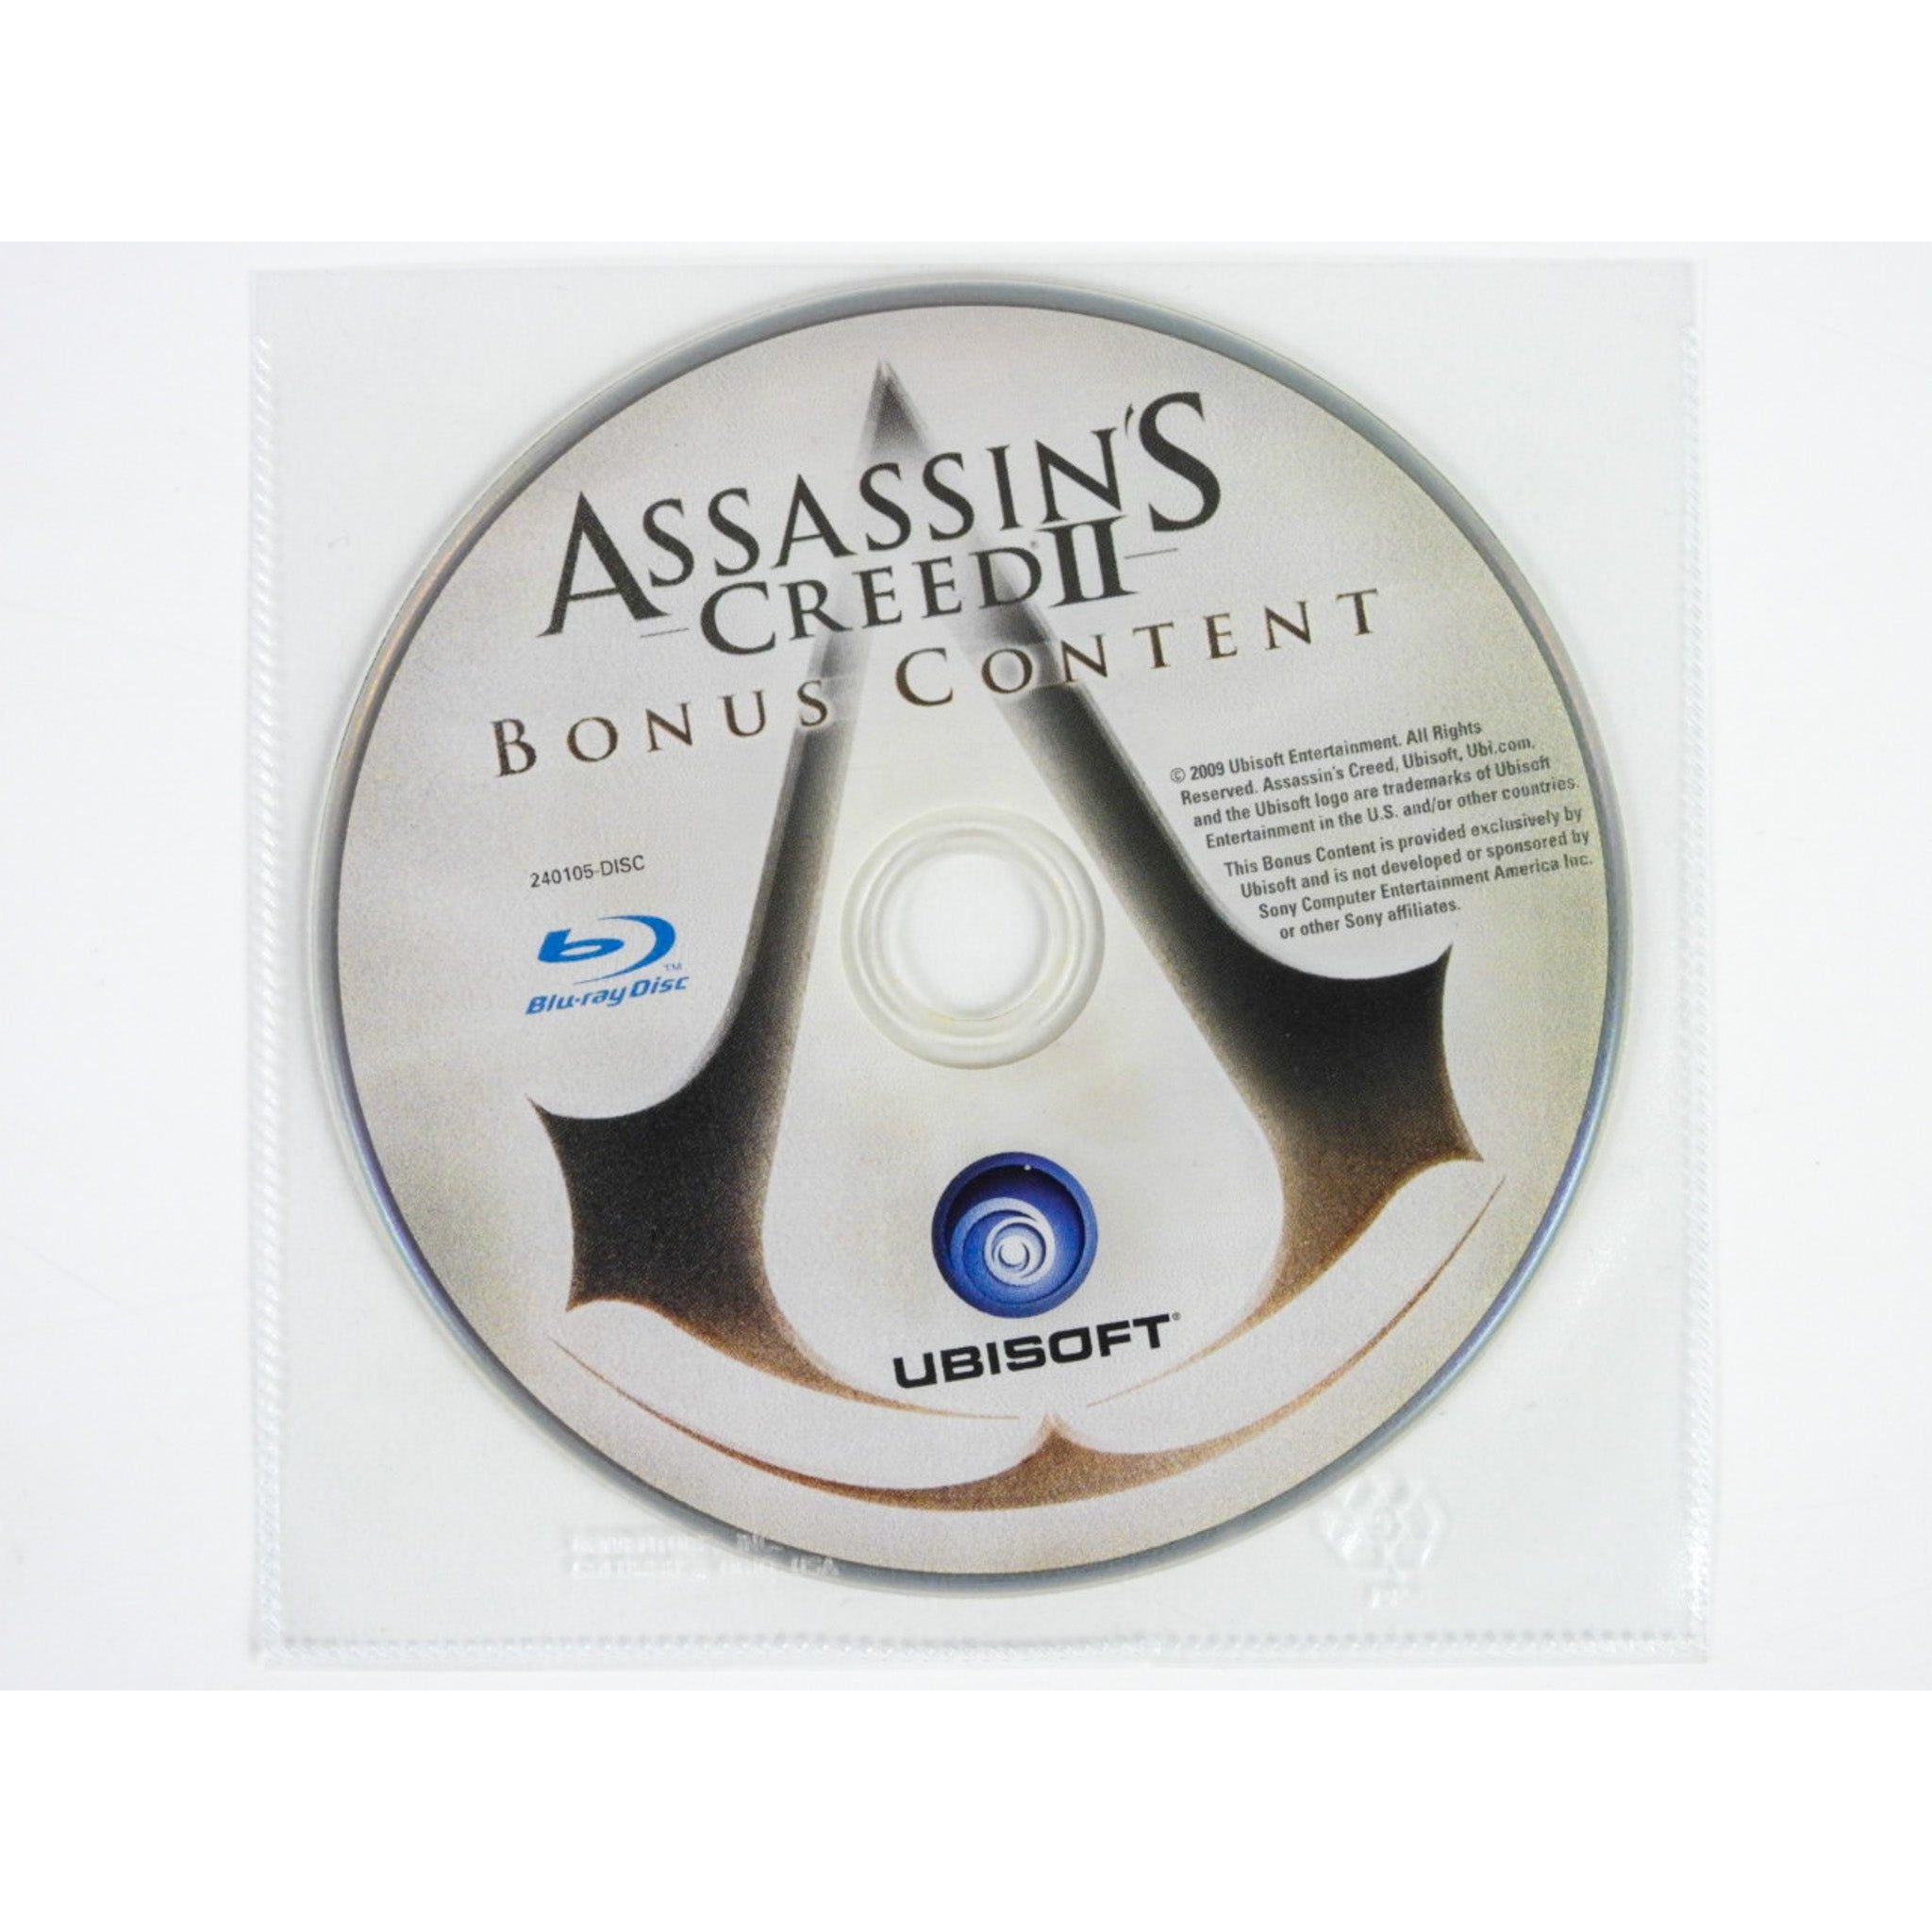 Assassin's Creed II Bonus Content Bluray